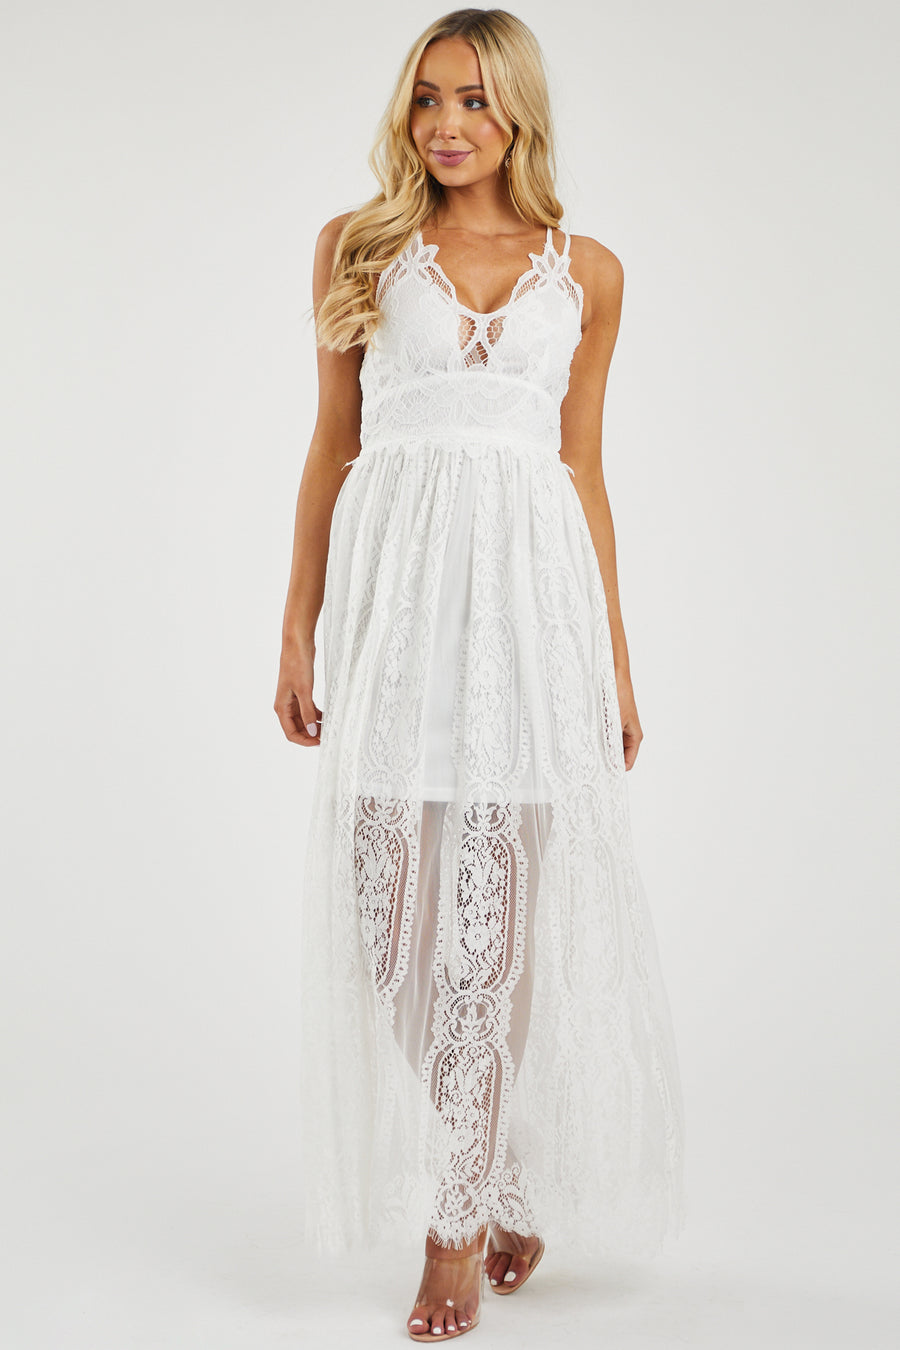 Ivory Lace Maxi Overlay Sleeveless Dress with Plunging Neck